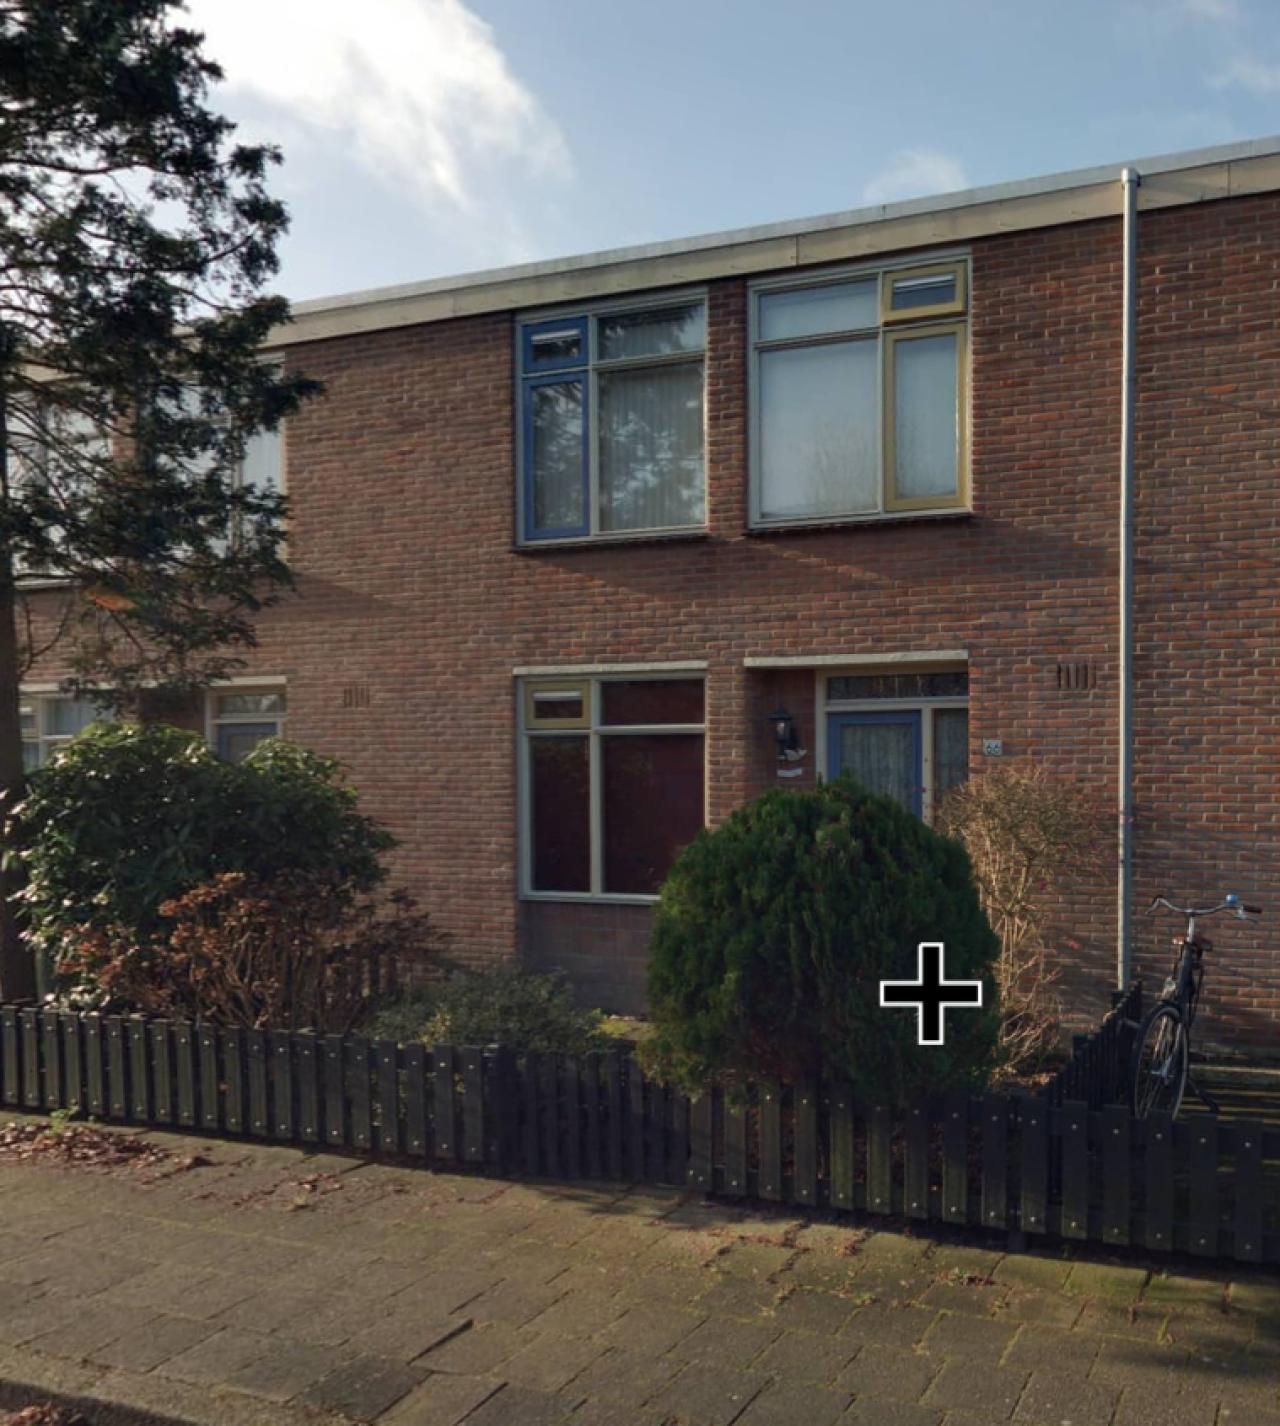 Juniusstraat 66, 1624 XE Hoorn, Nederland